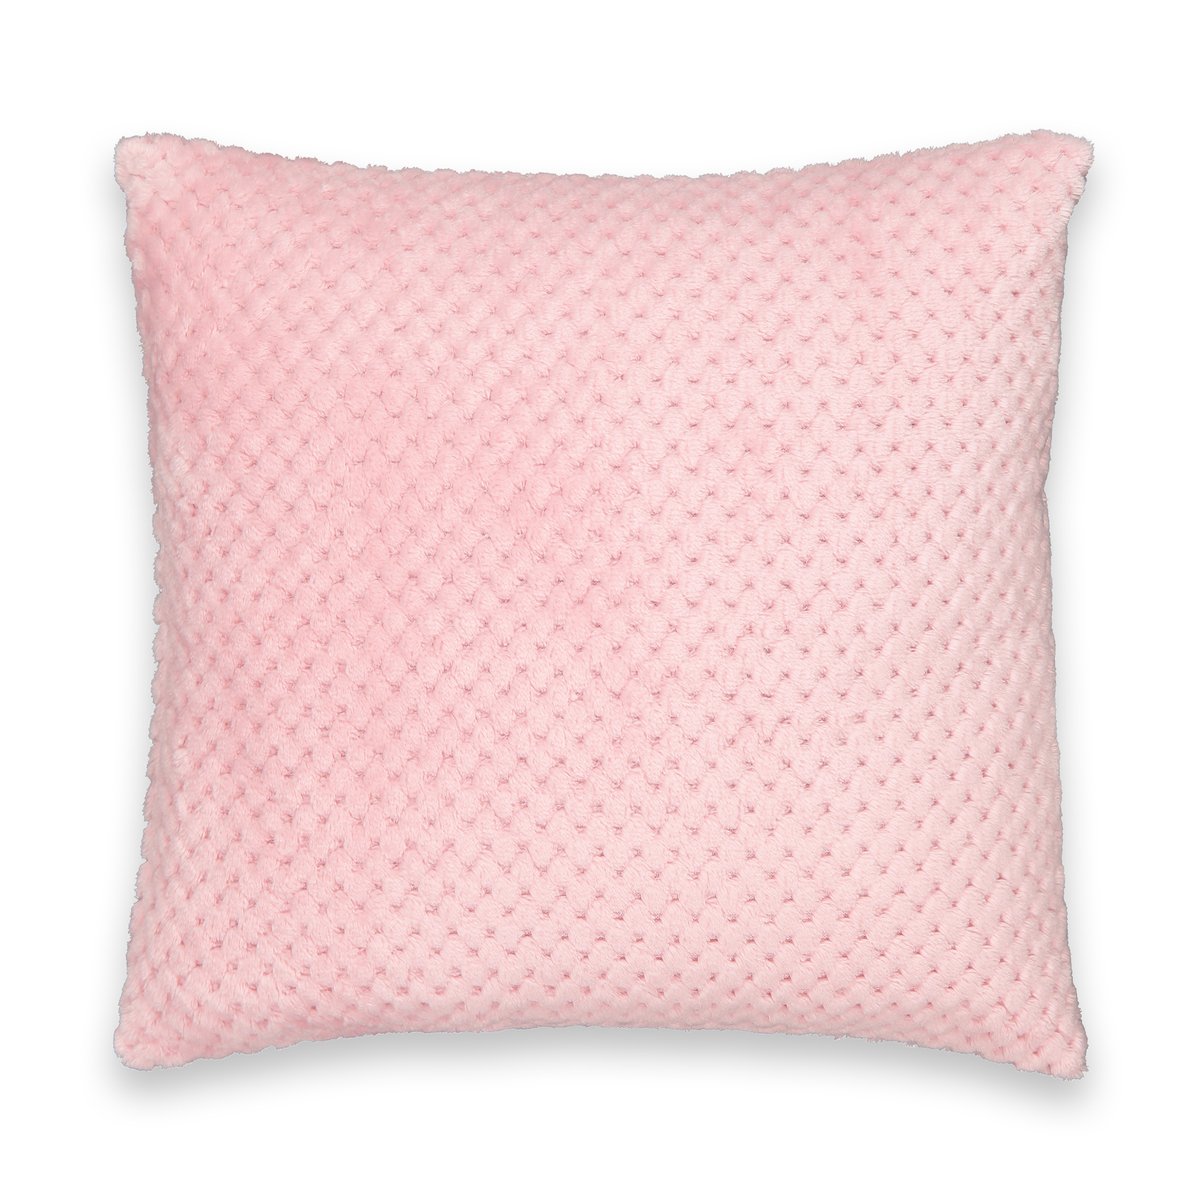 Чехол La Redoute Для подушки Puntos 40 x 40 см розовый, размер 40 x 40 см - фото 1